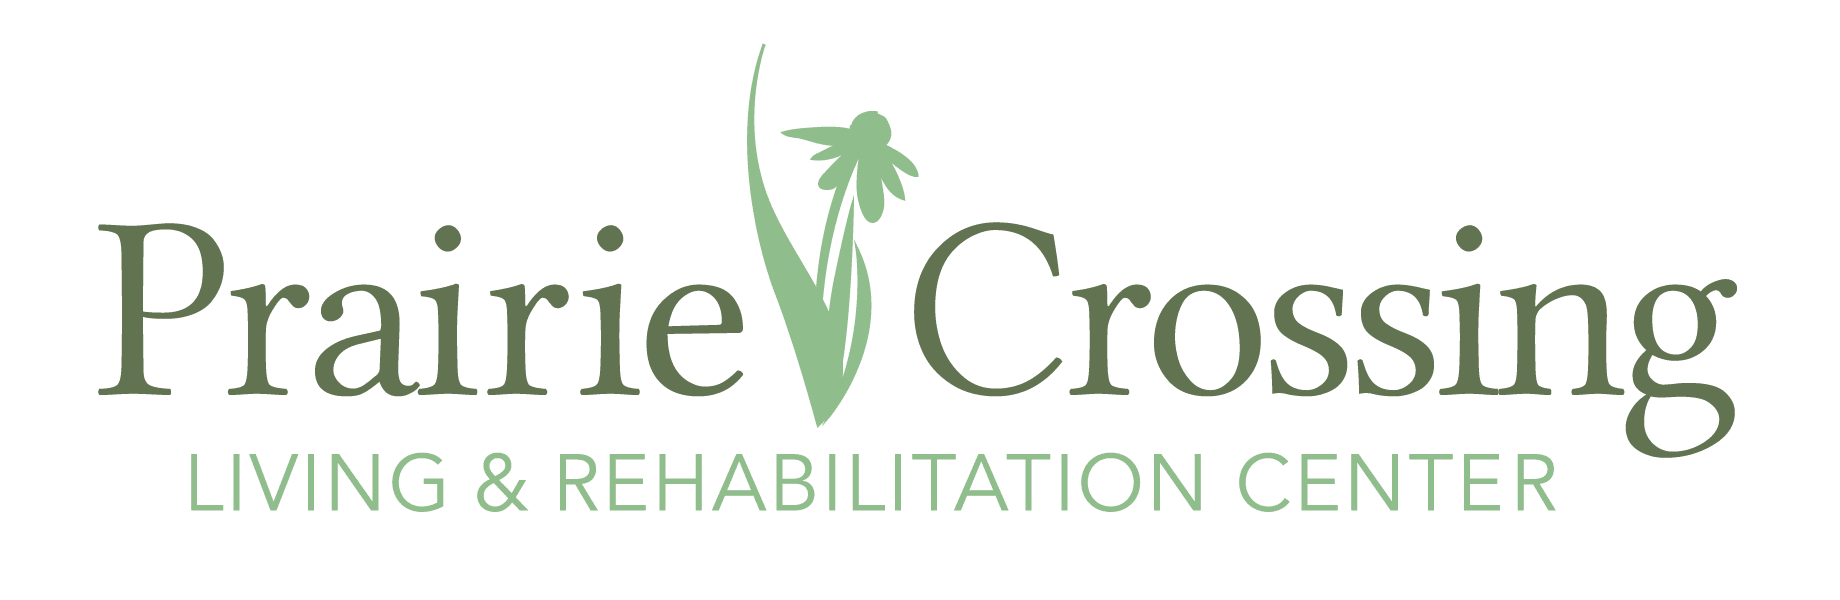 Prairie Crossing Living & Rehabilitation Center